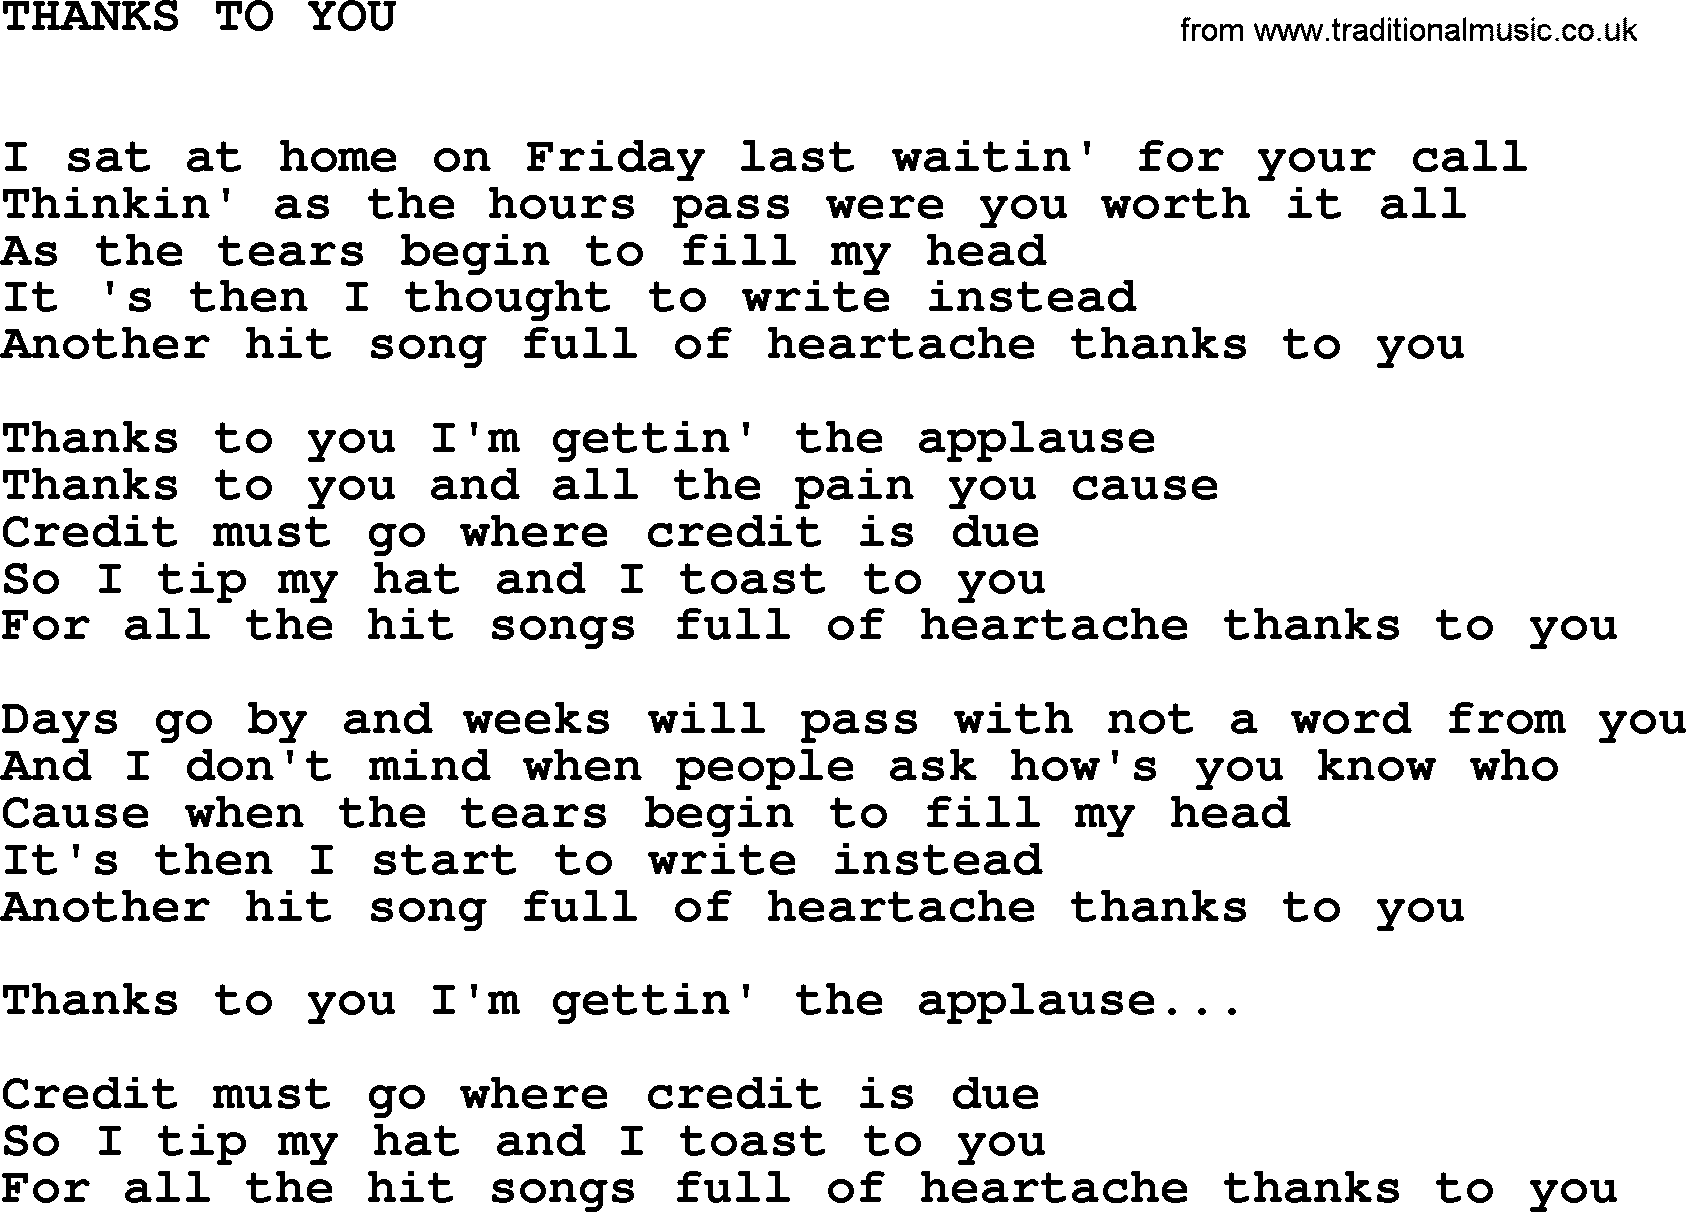 Johnny Cash song: Thanks To You, lyrics